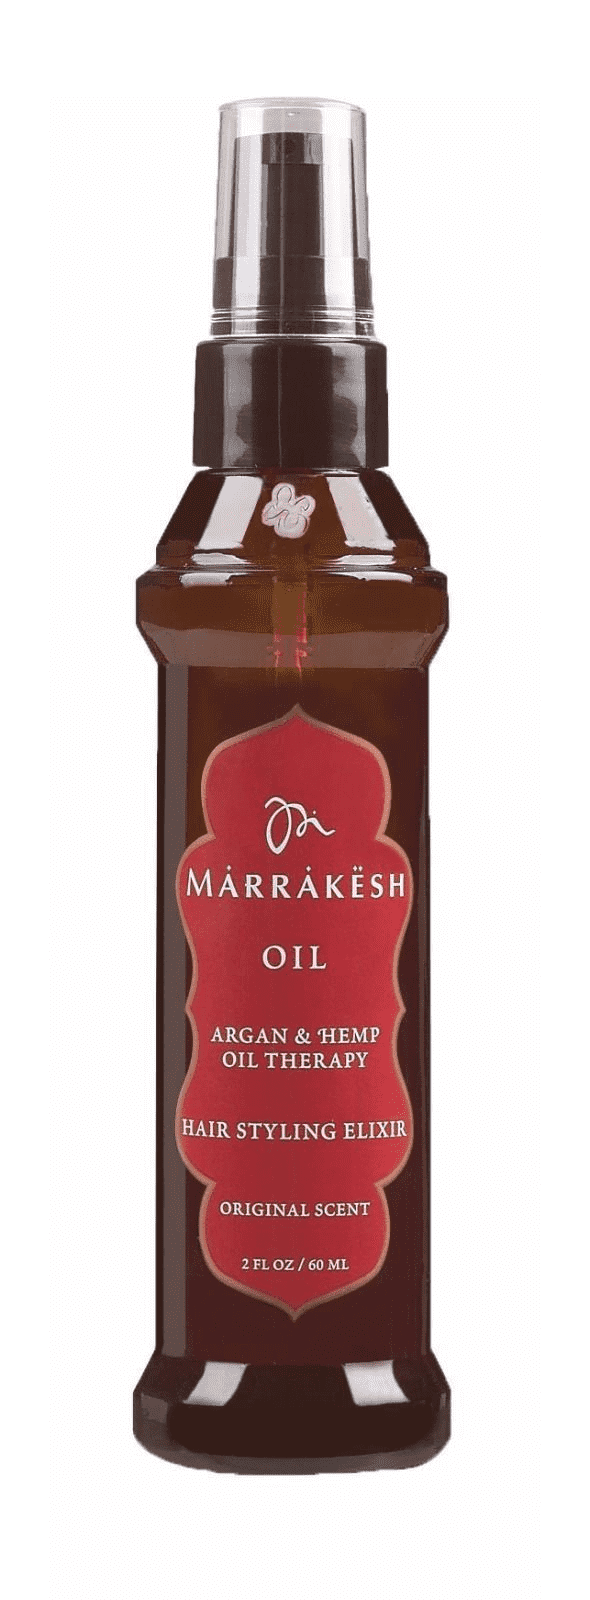 Therapy масло для волос. Хаир стайл масло для волос. Marrakesh Oil Argan Hemp Oil Therapy. Марракеш для волос. Marakesh масло для волос.